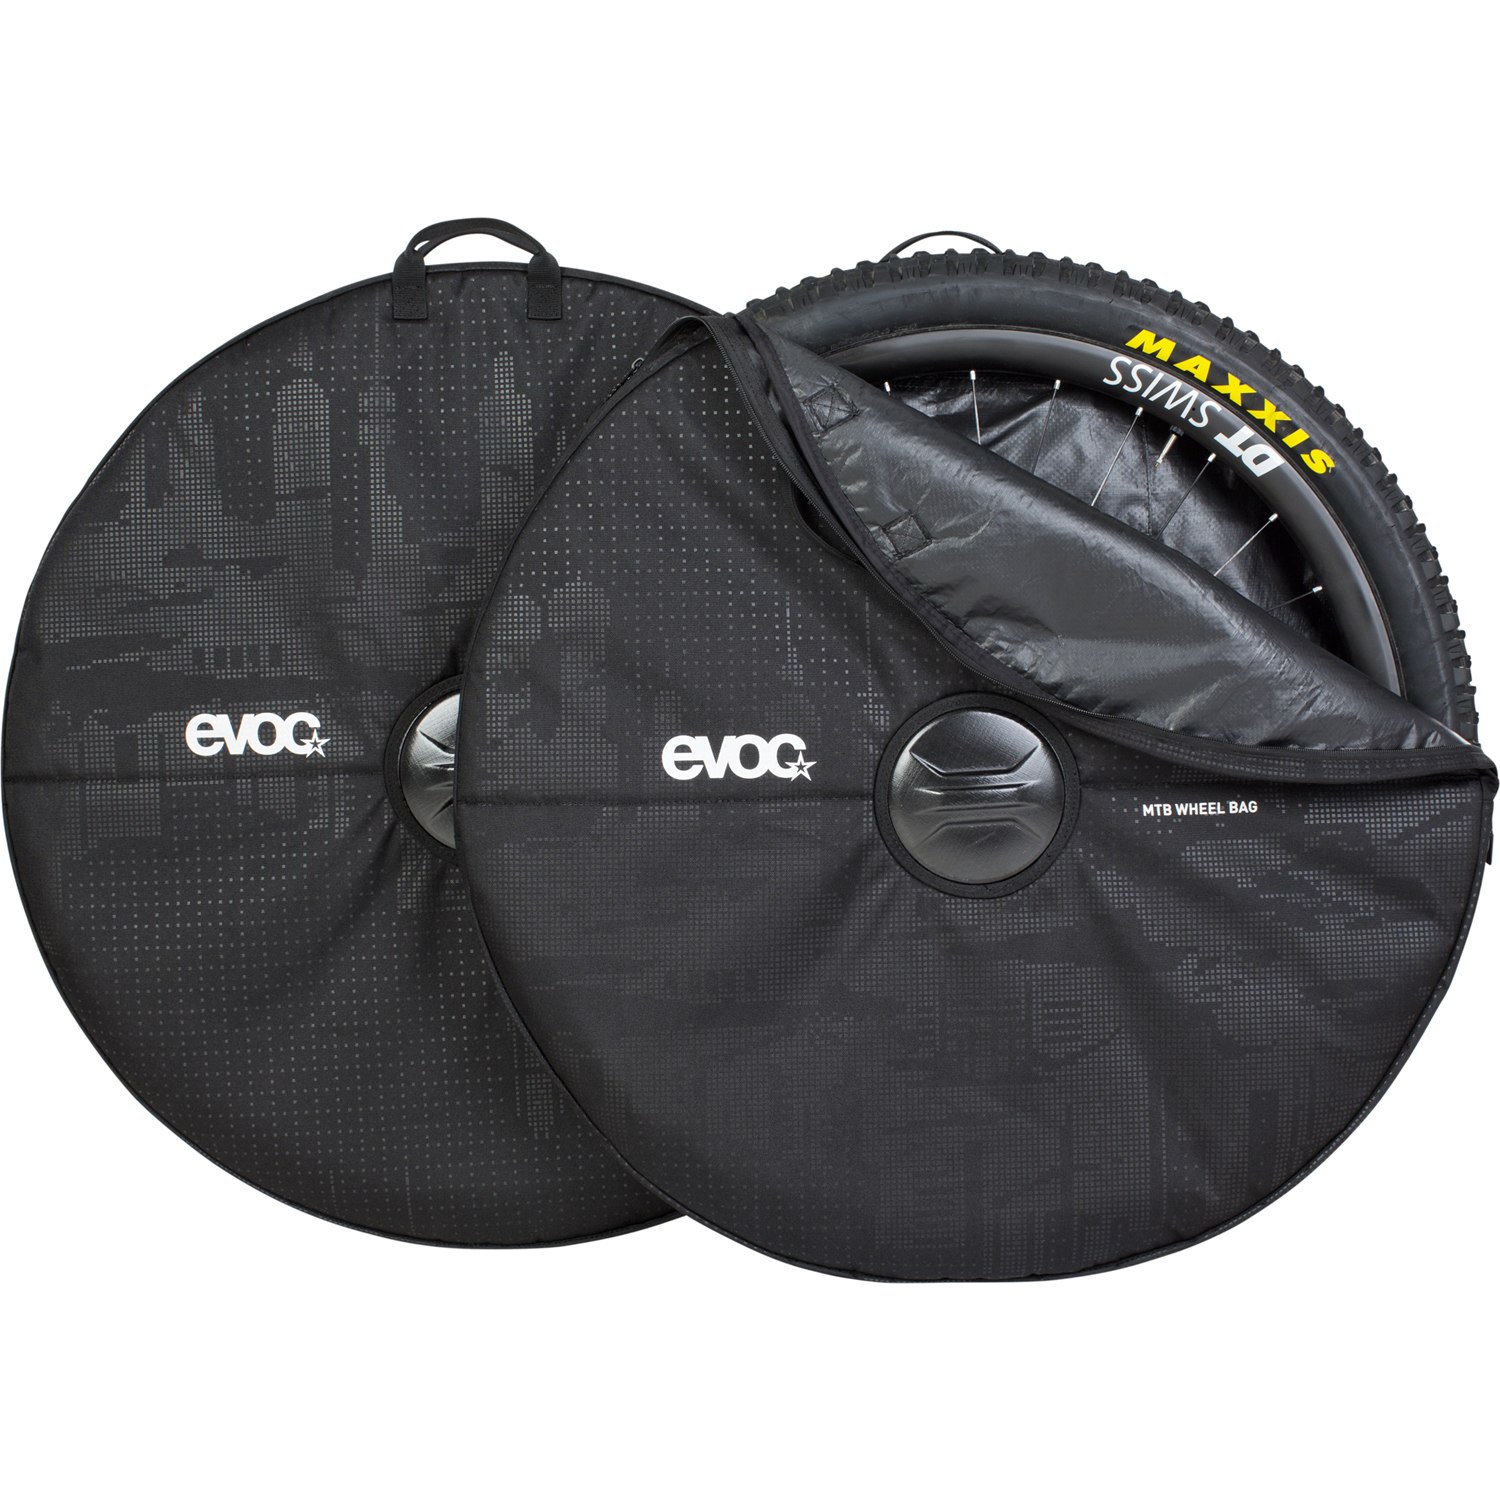 Evoc MTB WHEEL BAG - Reifentasche Set (2 Stück) - Black